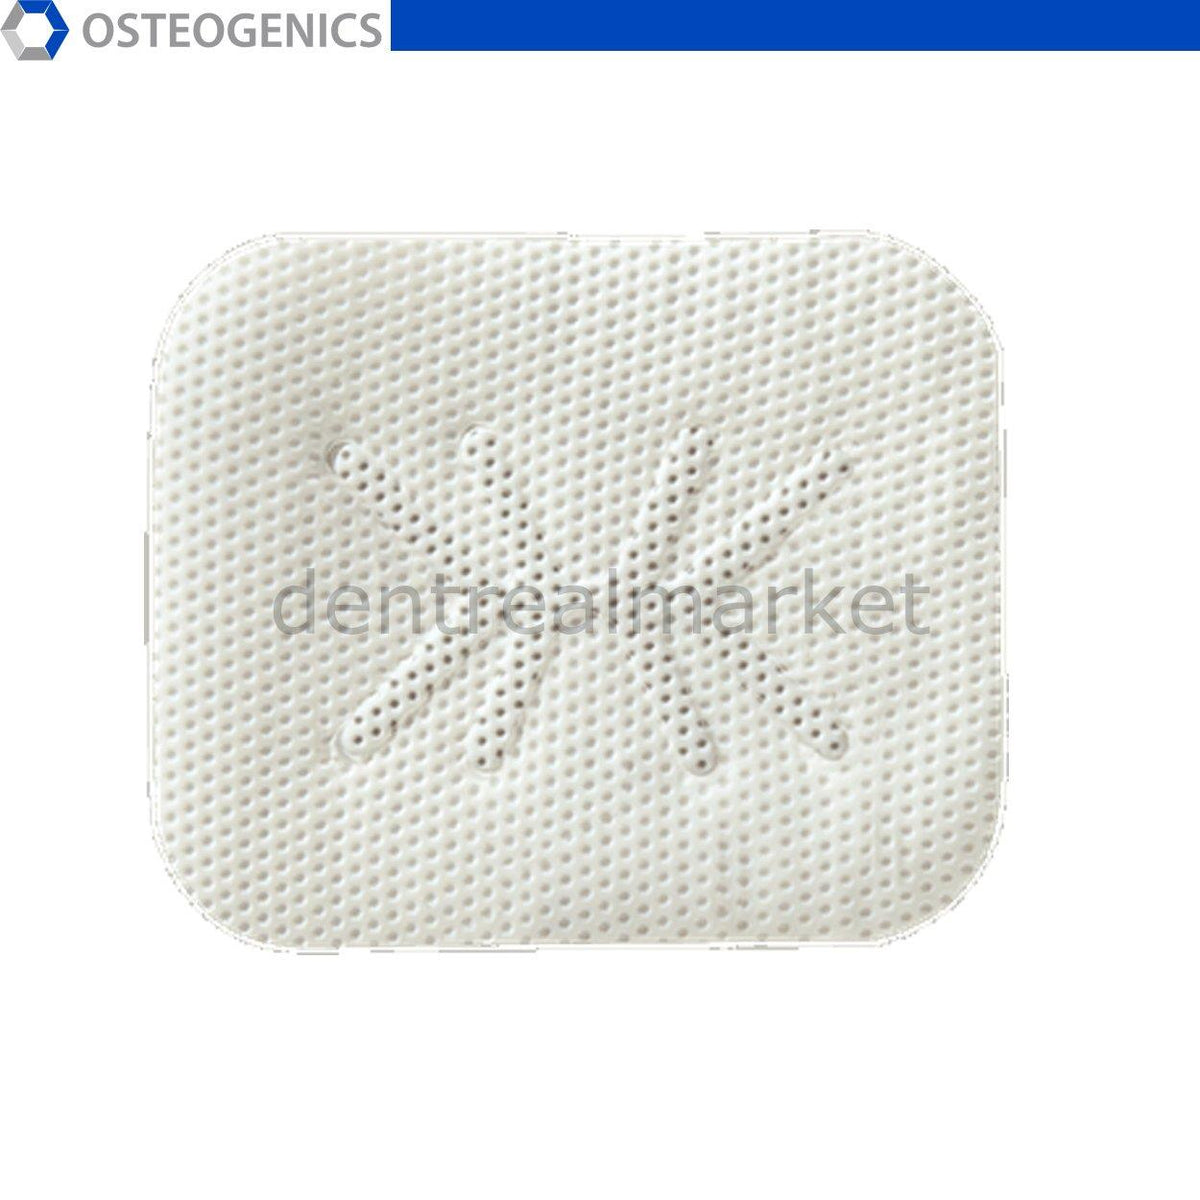 DentrealStore - Osteogenics Cytoplast Titanium-High-Density PTFE Membranes - XL 30*40 mm